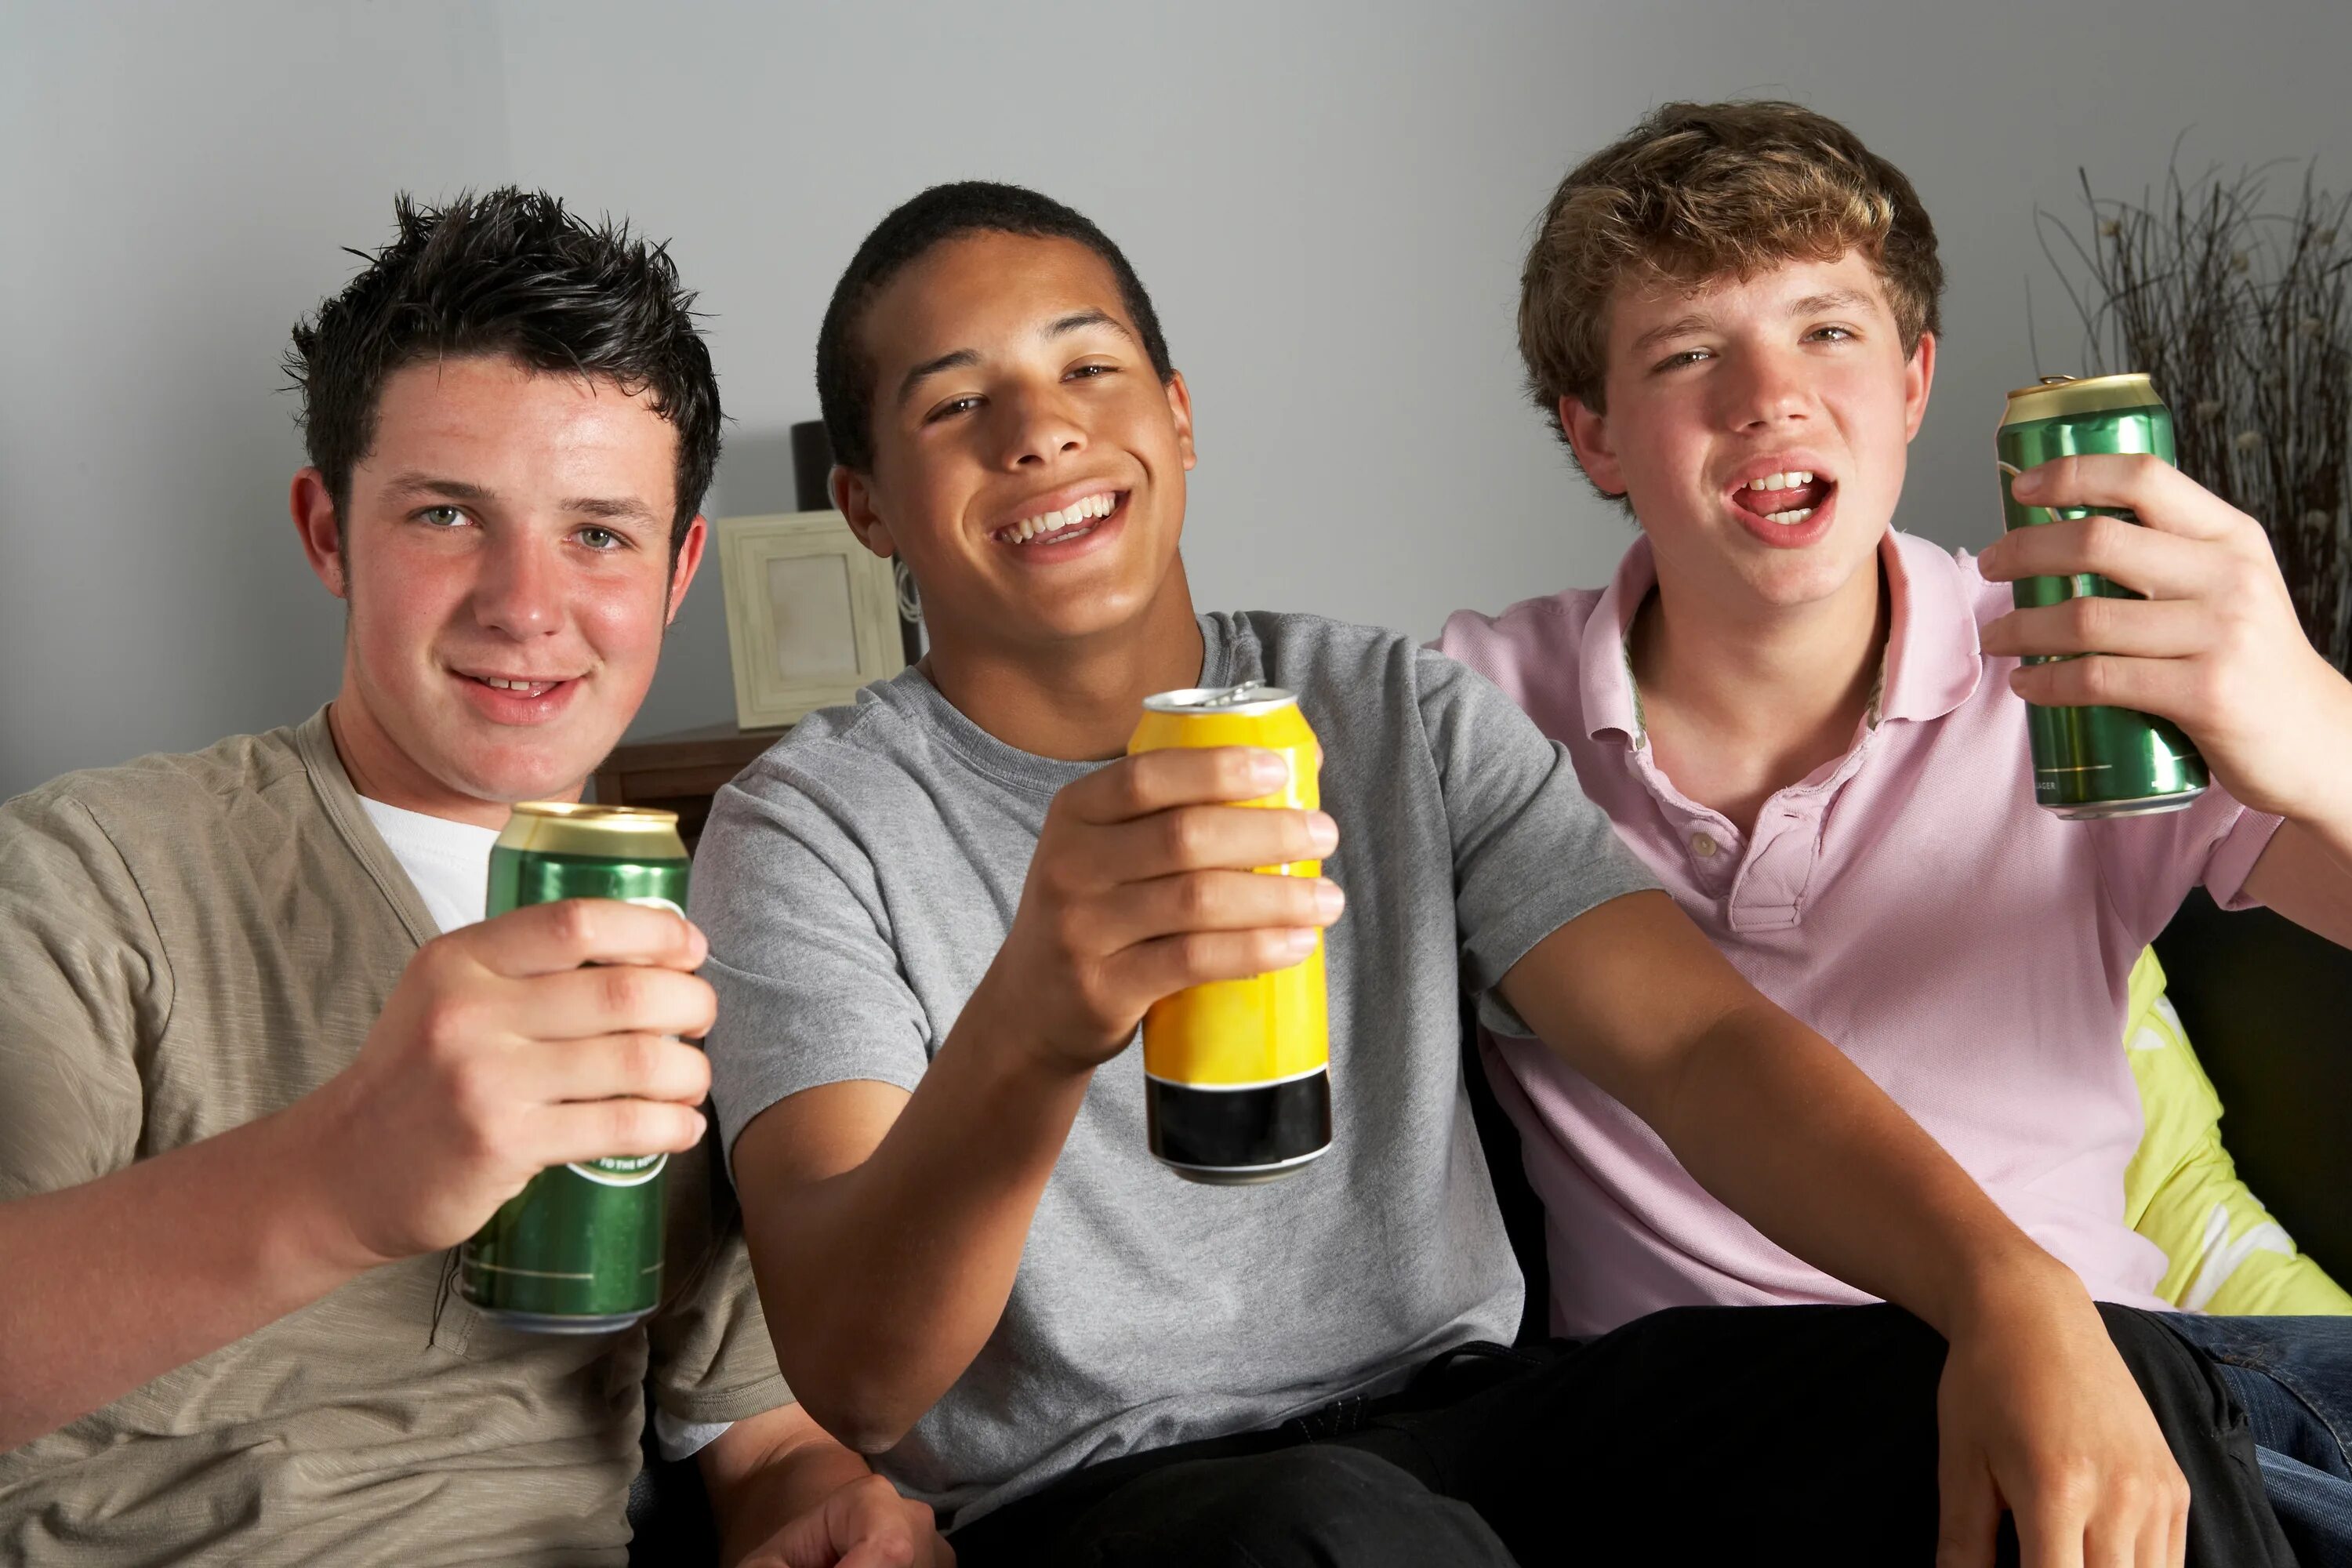 Молодежь с пивом. Алкоголь и молодежь. Молодежь пьет пиво. Студенты пьют. Without drinking